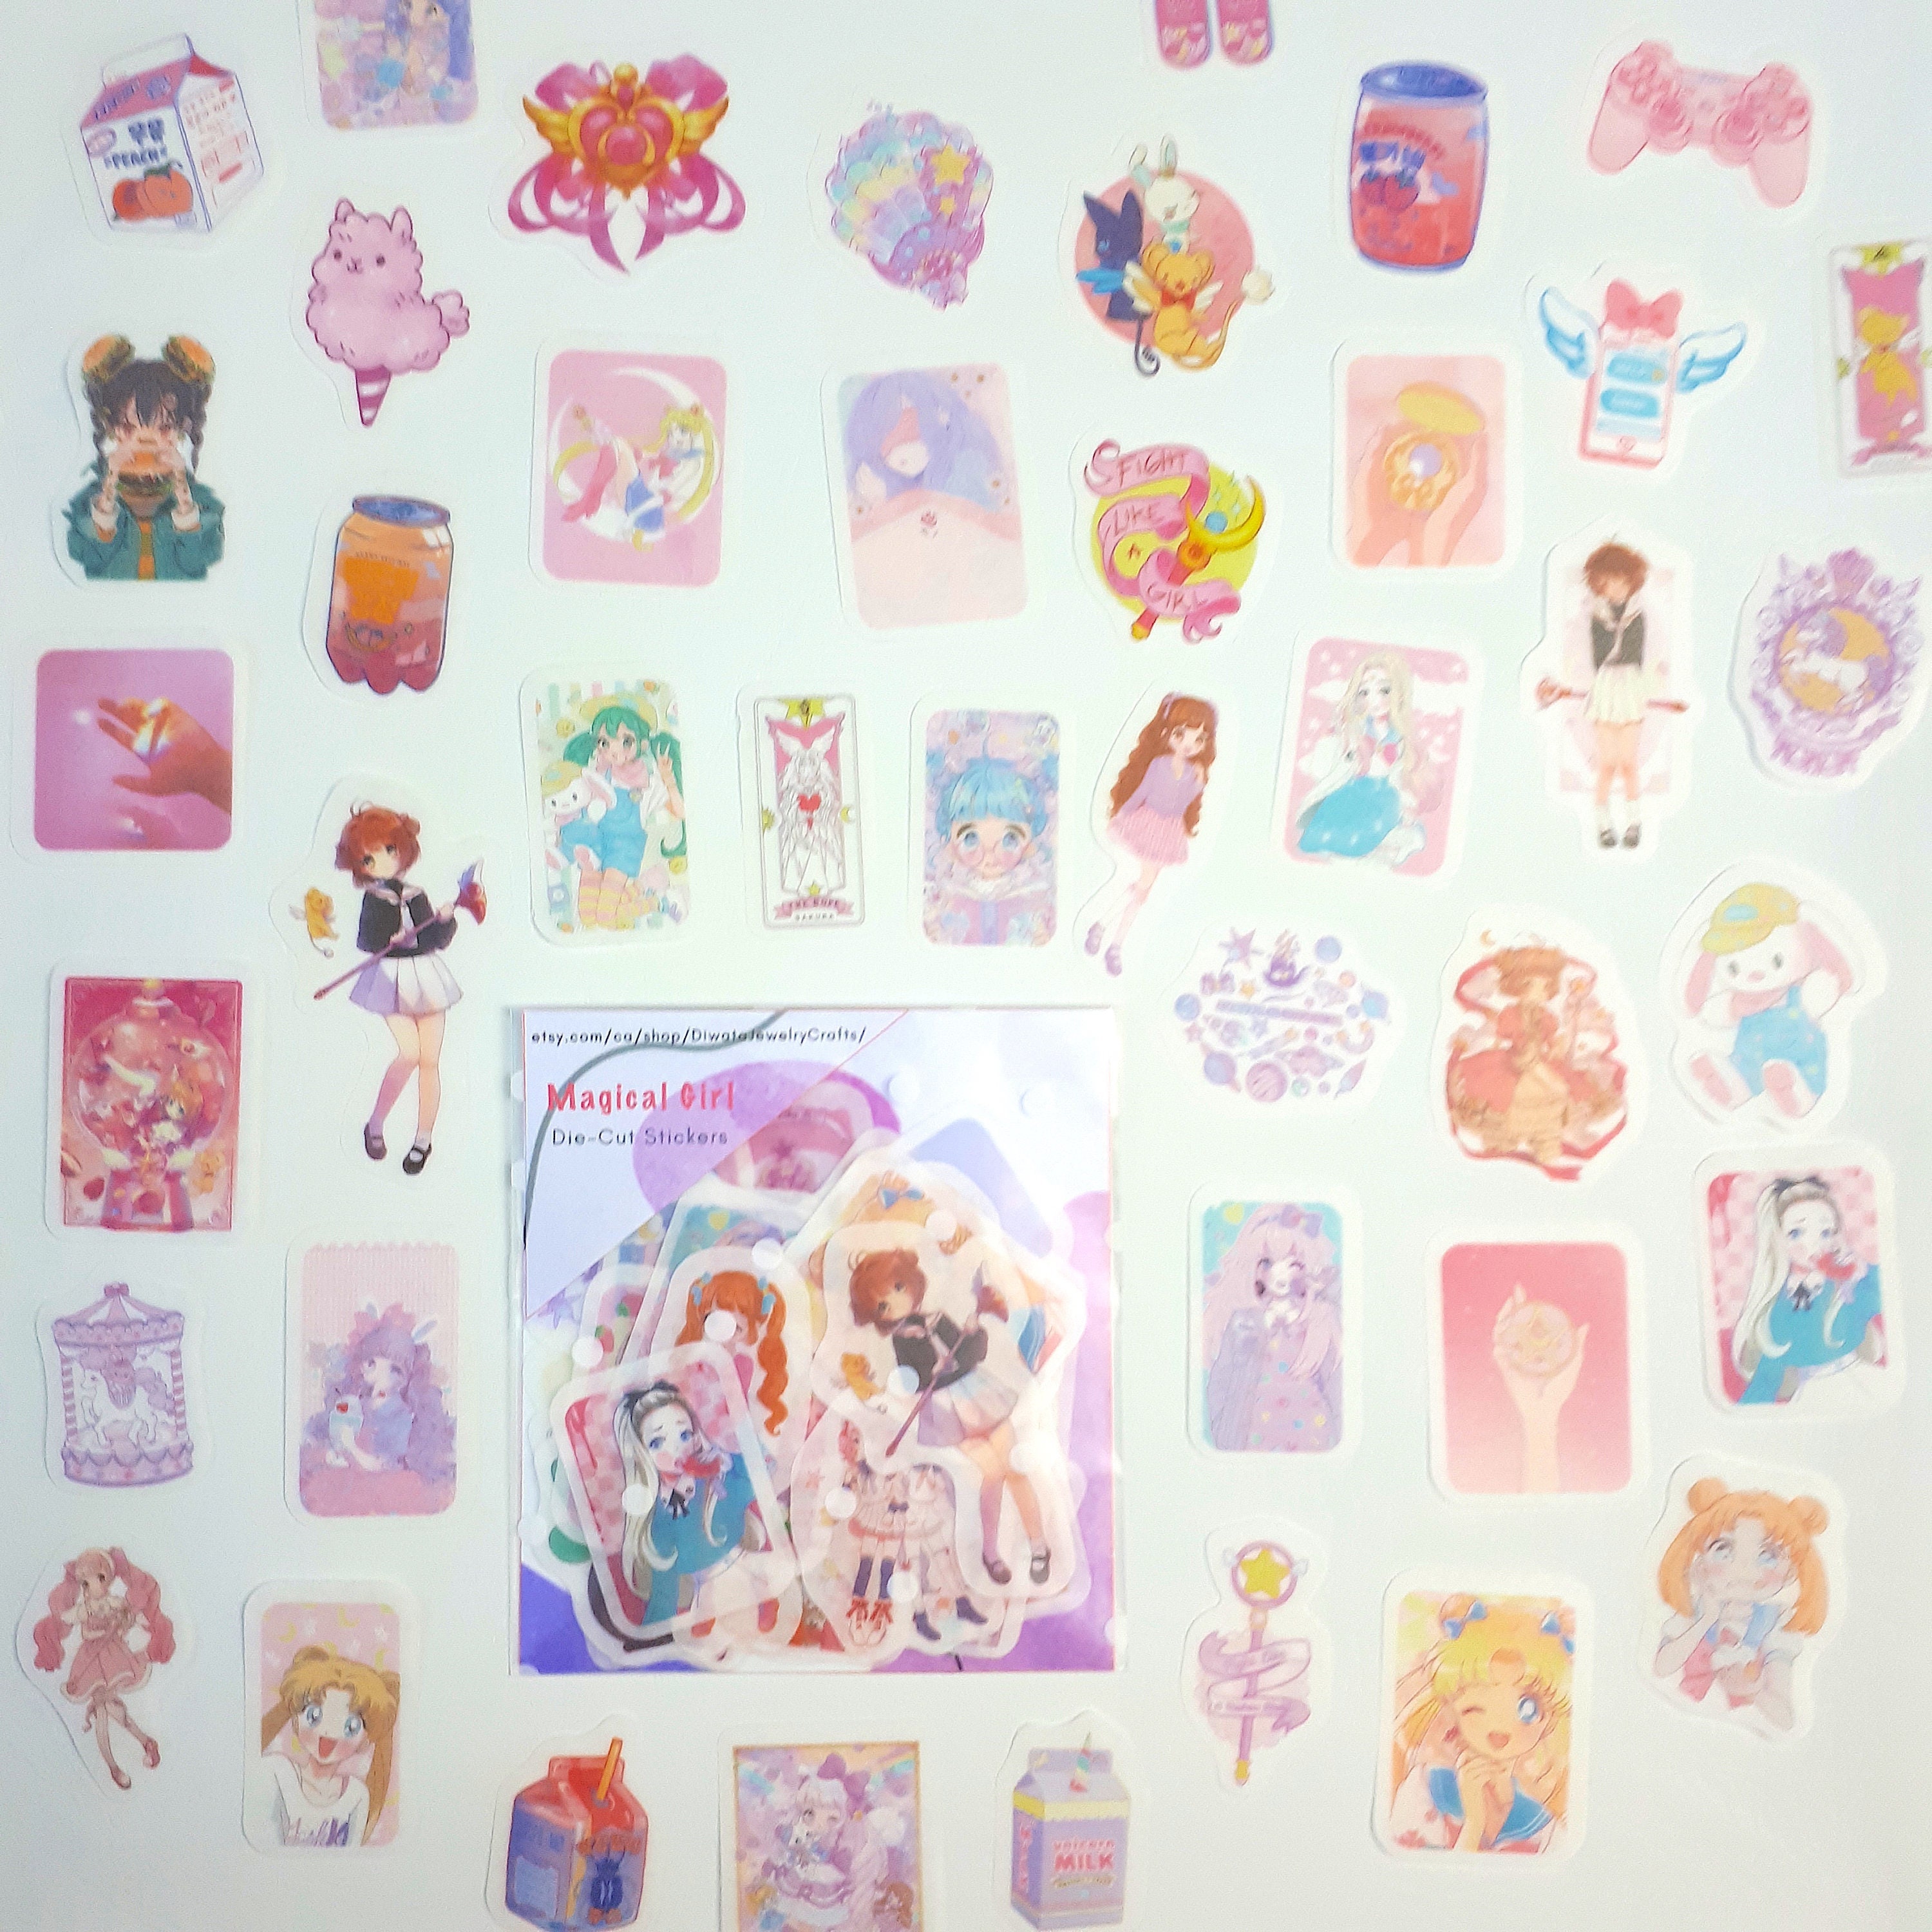 Mahou Shoujo Magical Girl Kawaii Cute Details about   Japanese Harajuku E-Girl Sticker Sheets 